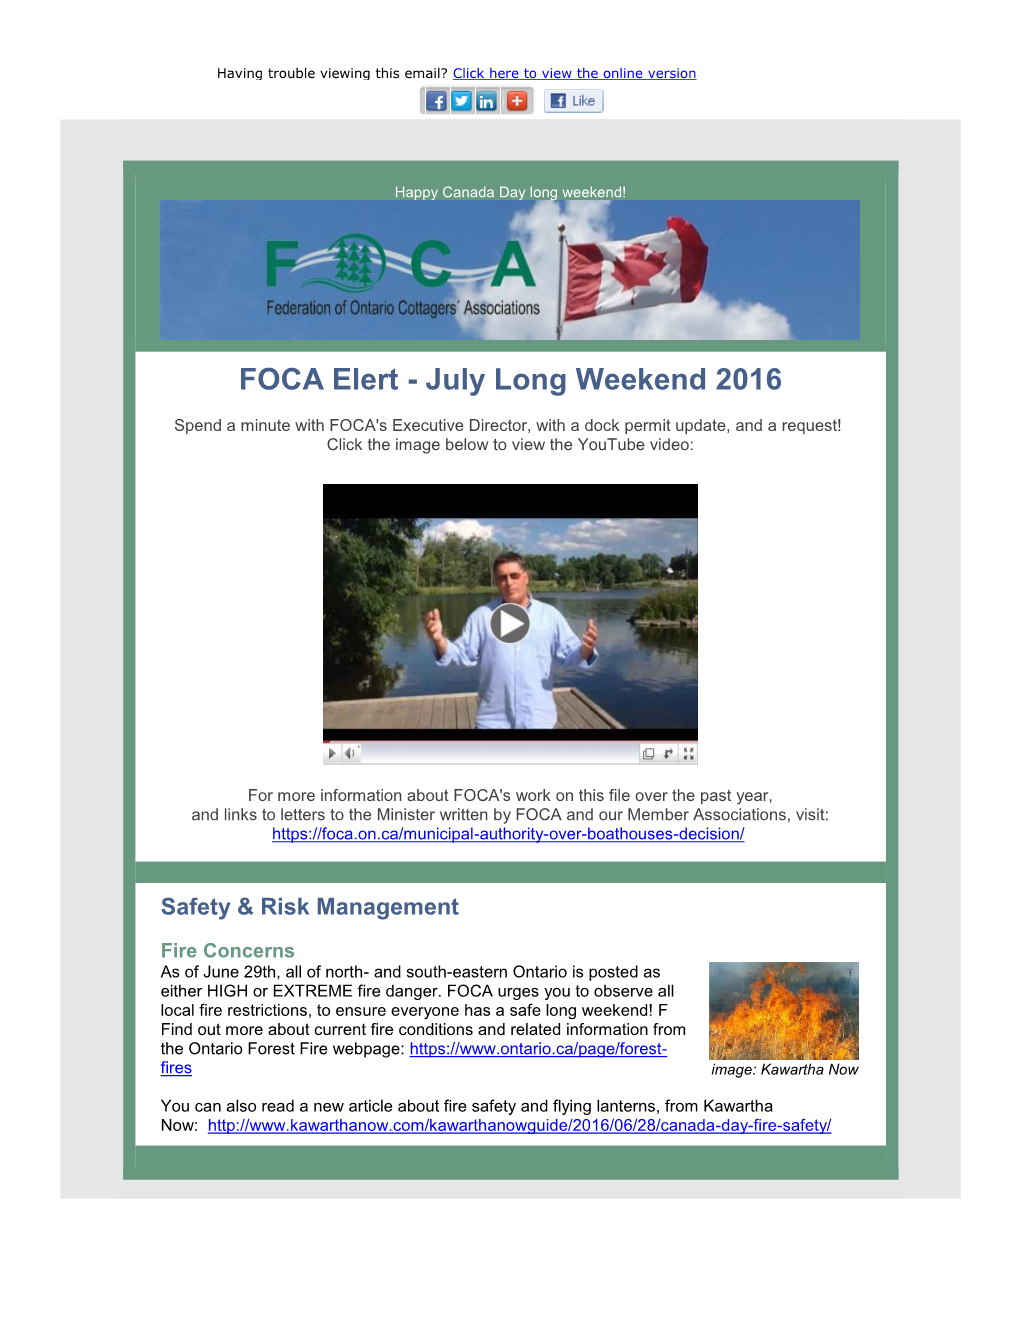 FOCA Elert - July Long Weekend 2016